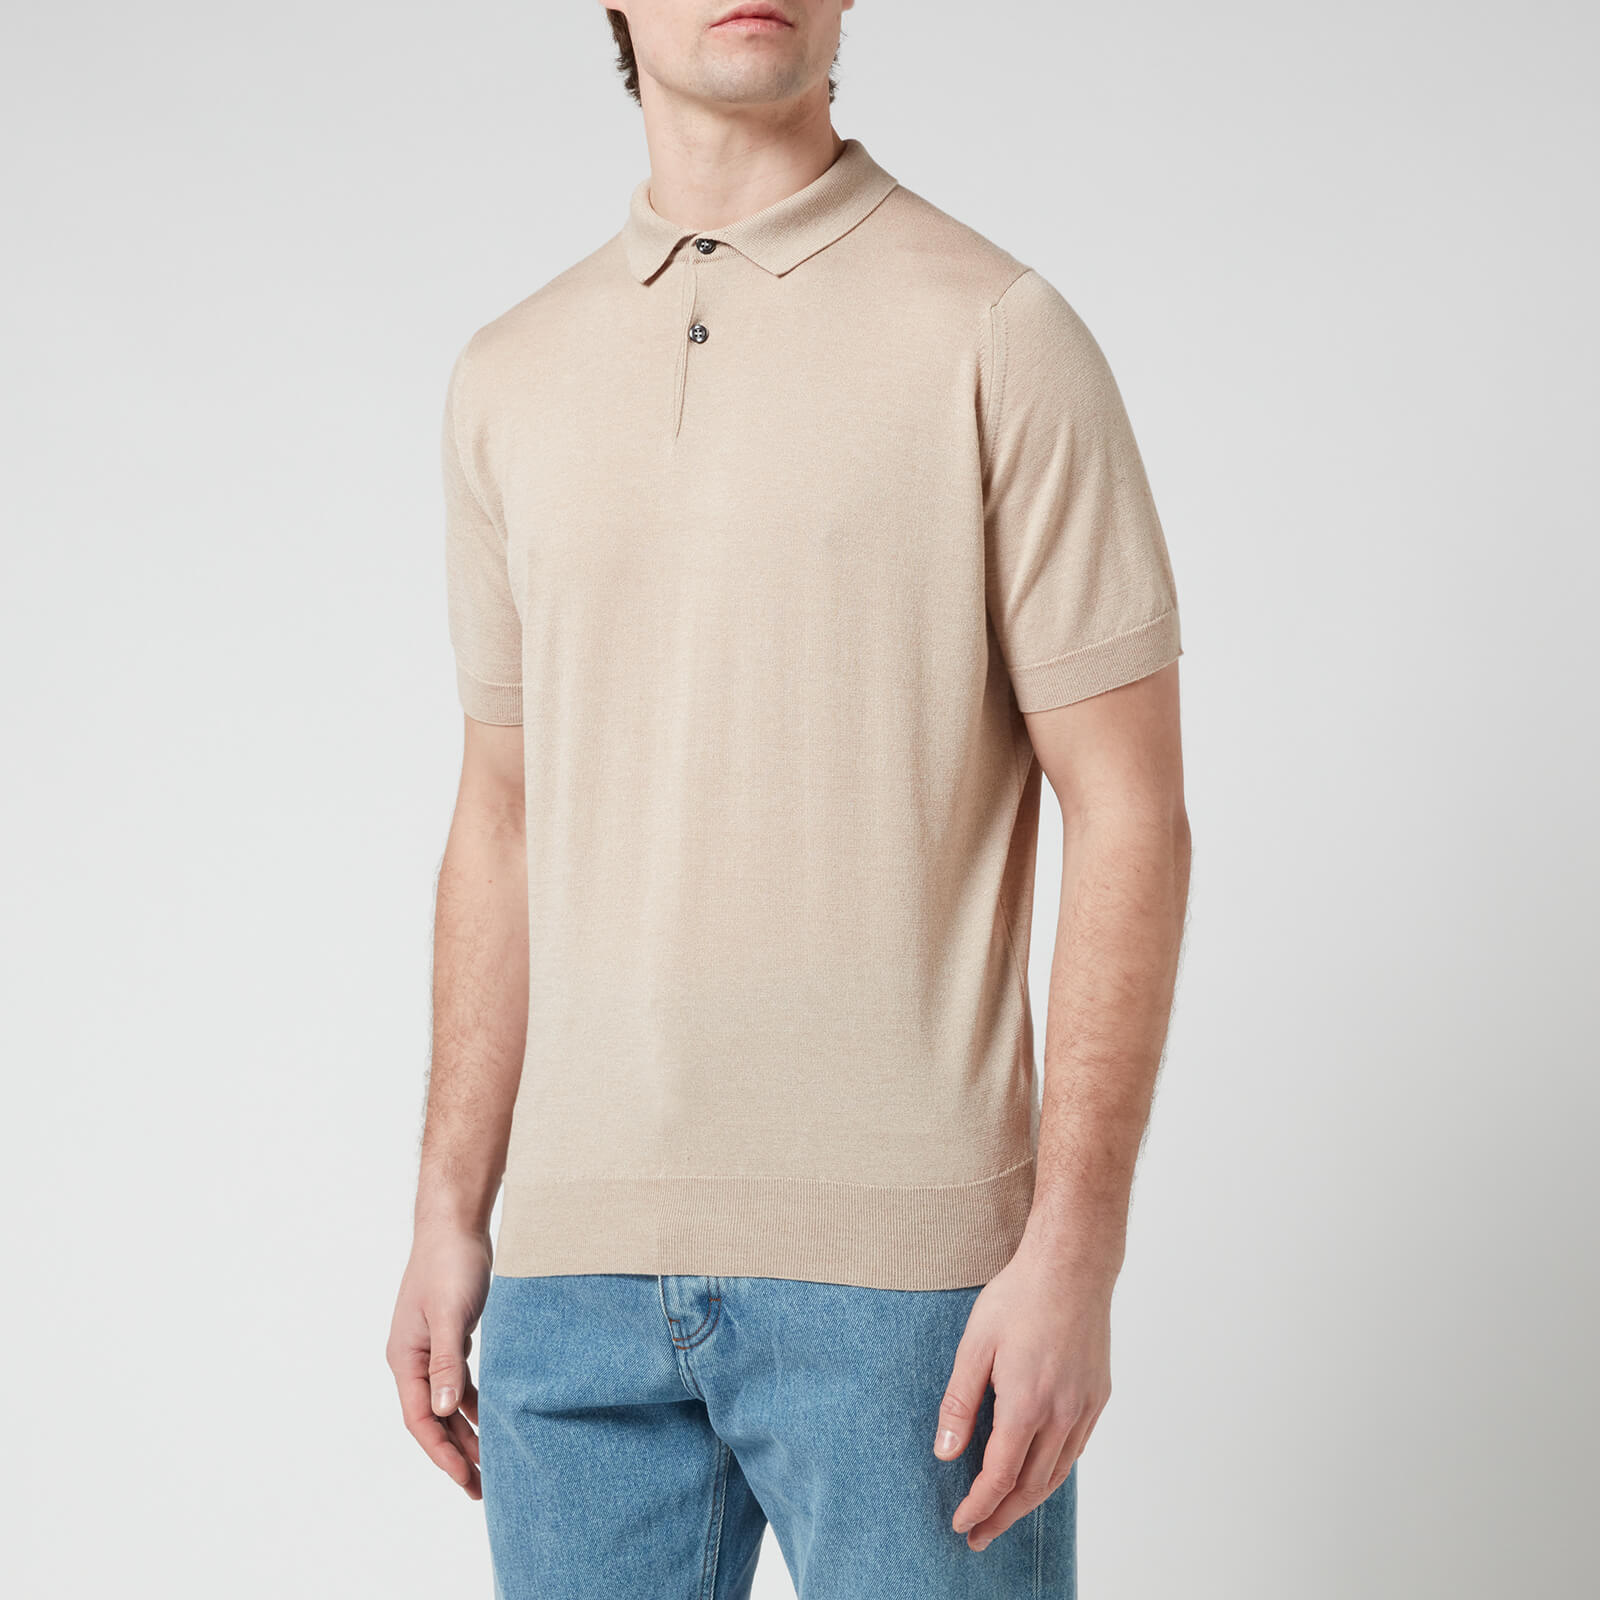 John Smedley Men's Cpayton Polo Shirt - Light Taupe - S